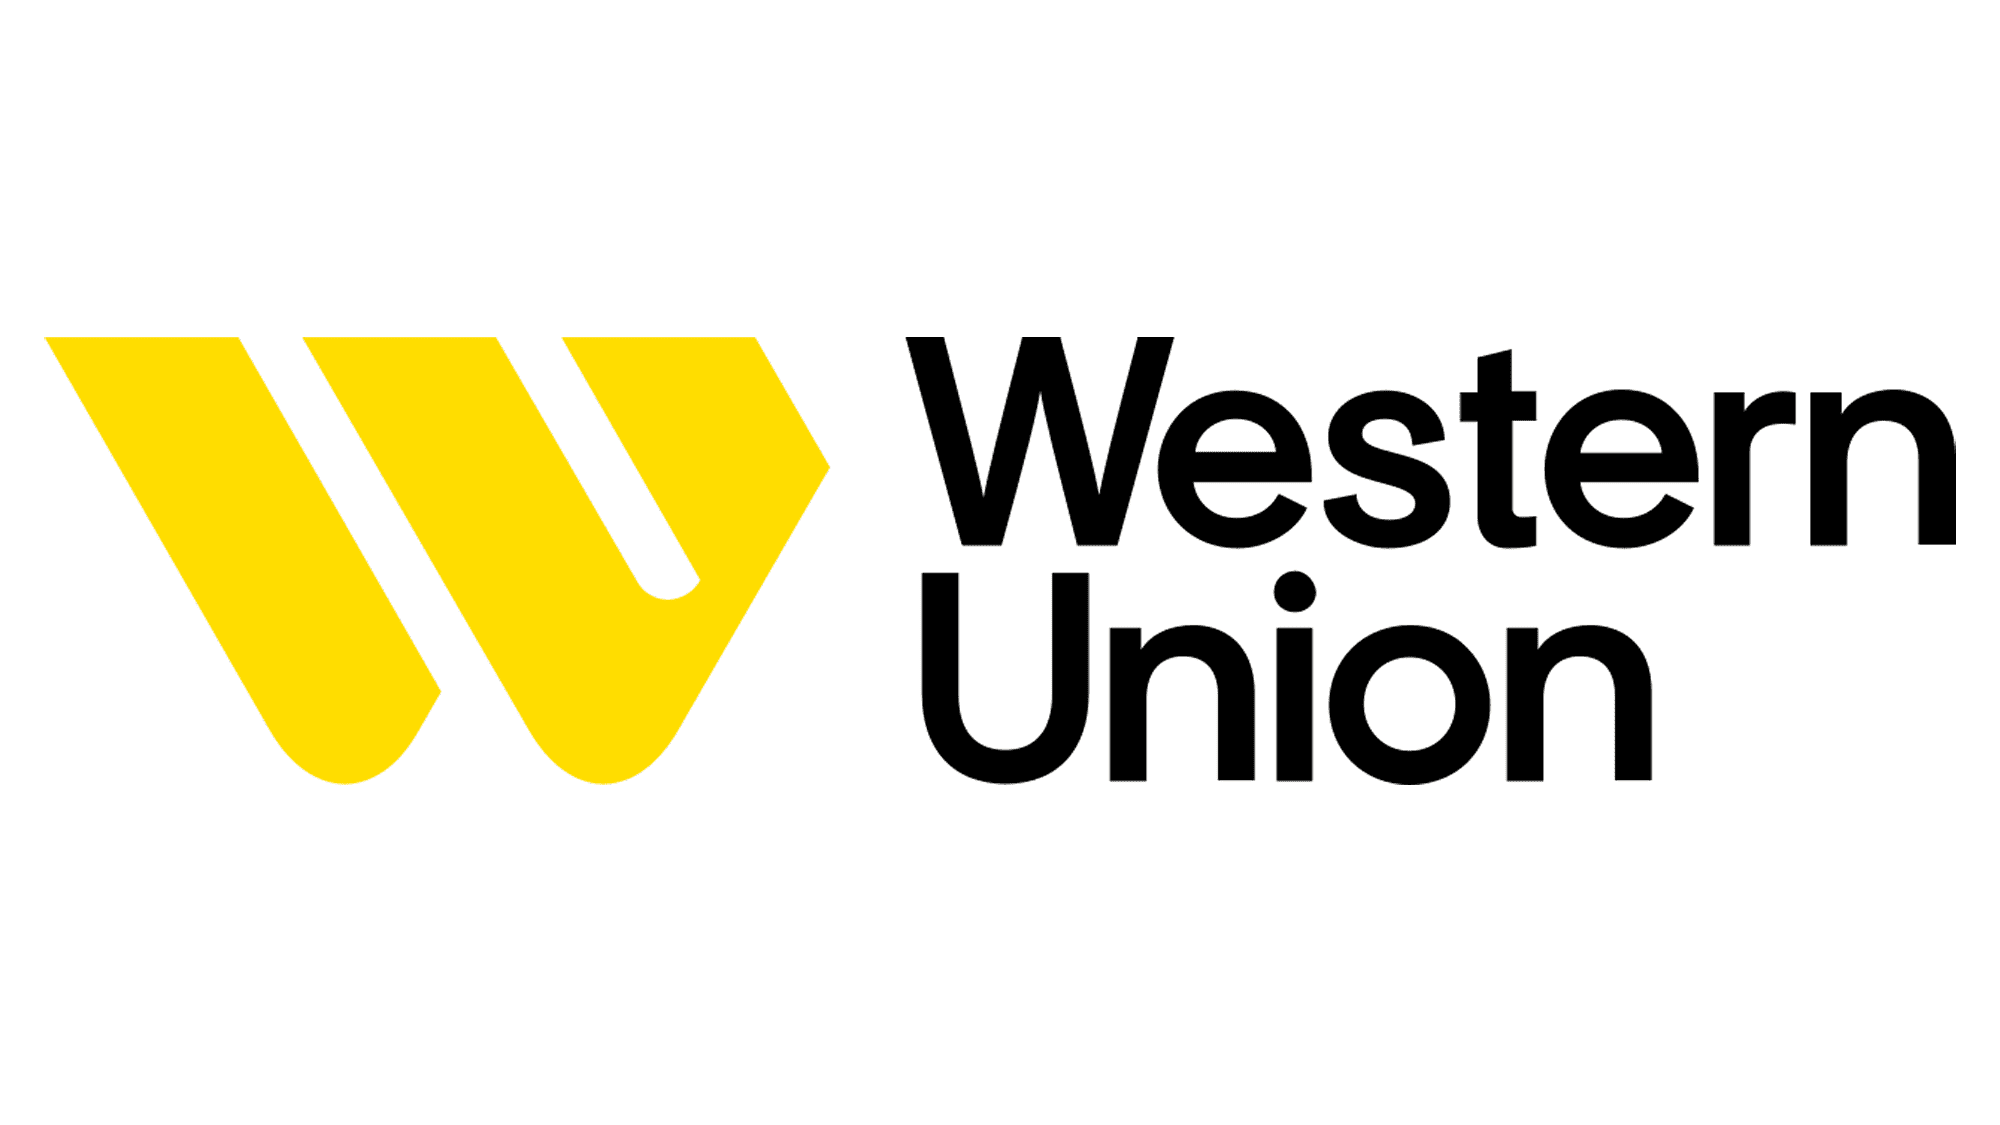 File:Western Union WU LOGO.jpg - Wikimedia Commons